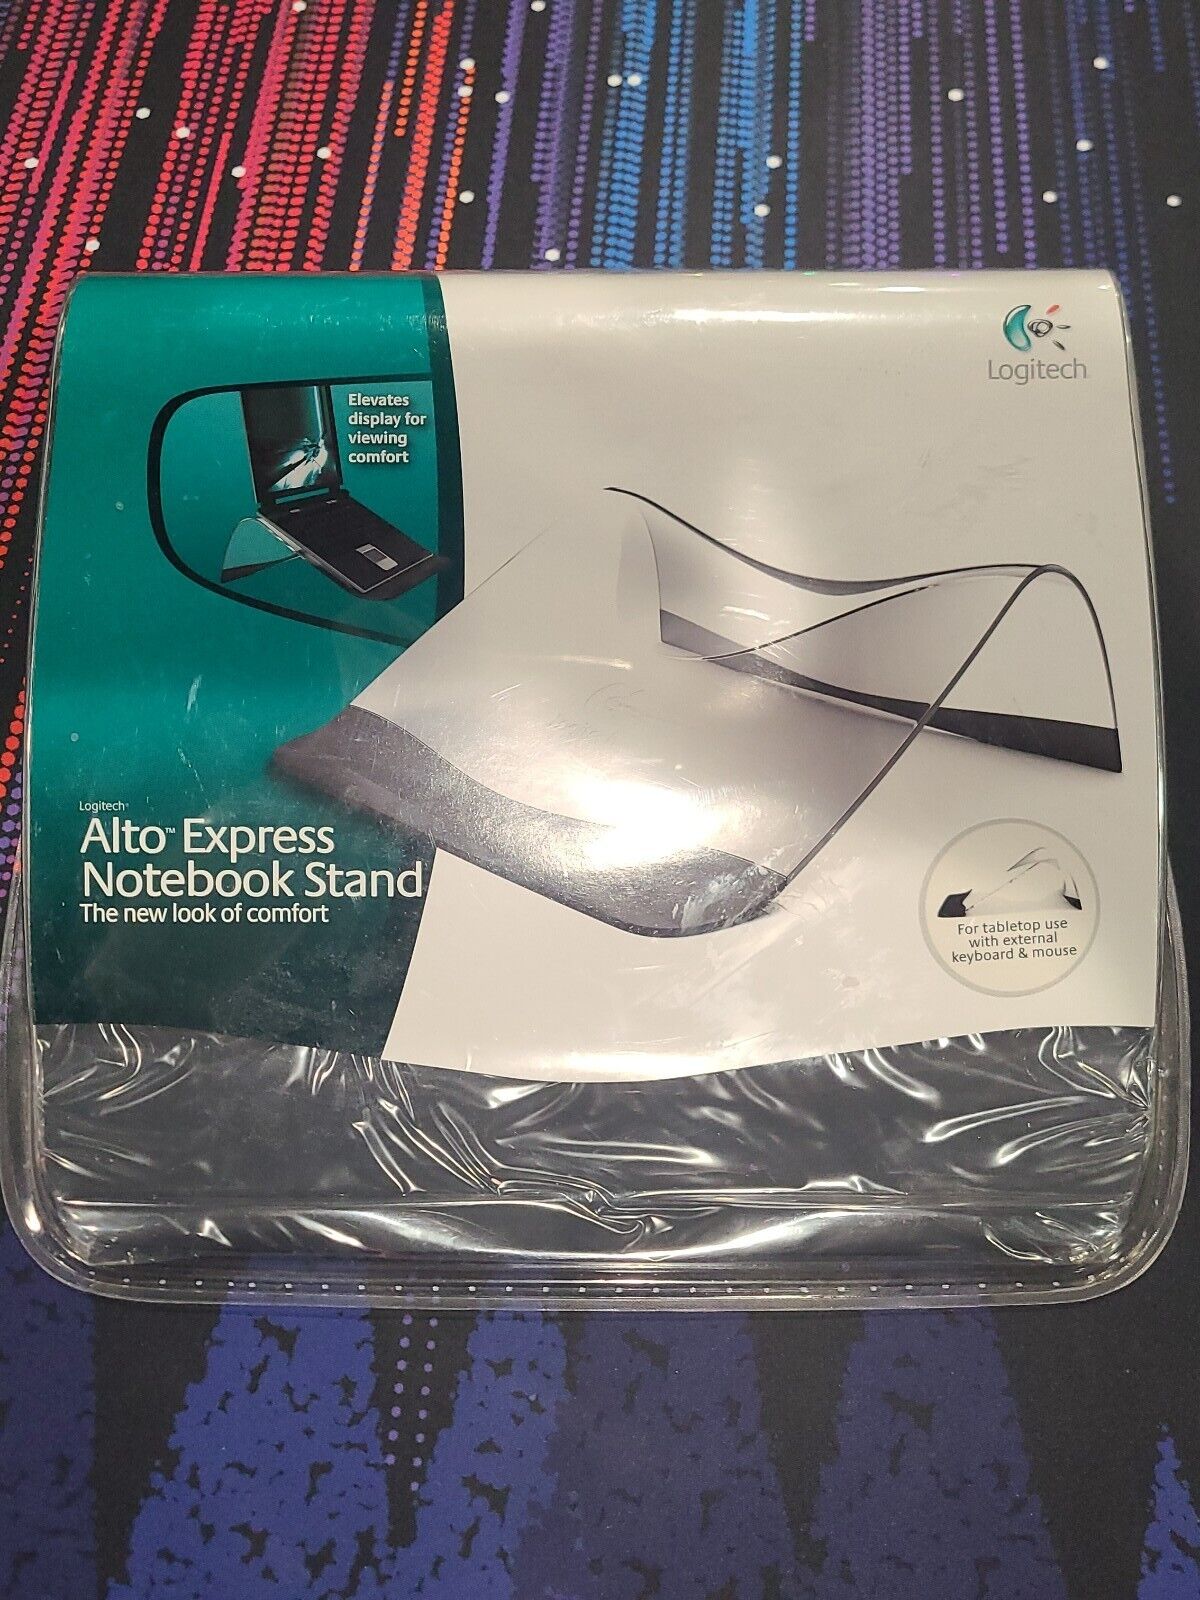 Brand NEW logitech alto express notebook stand improve your laptop/MAC comfort